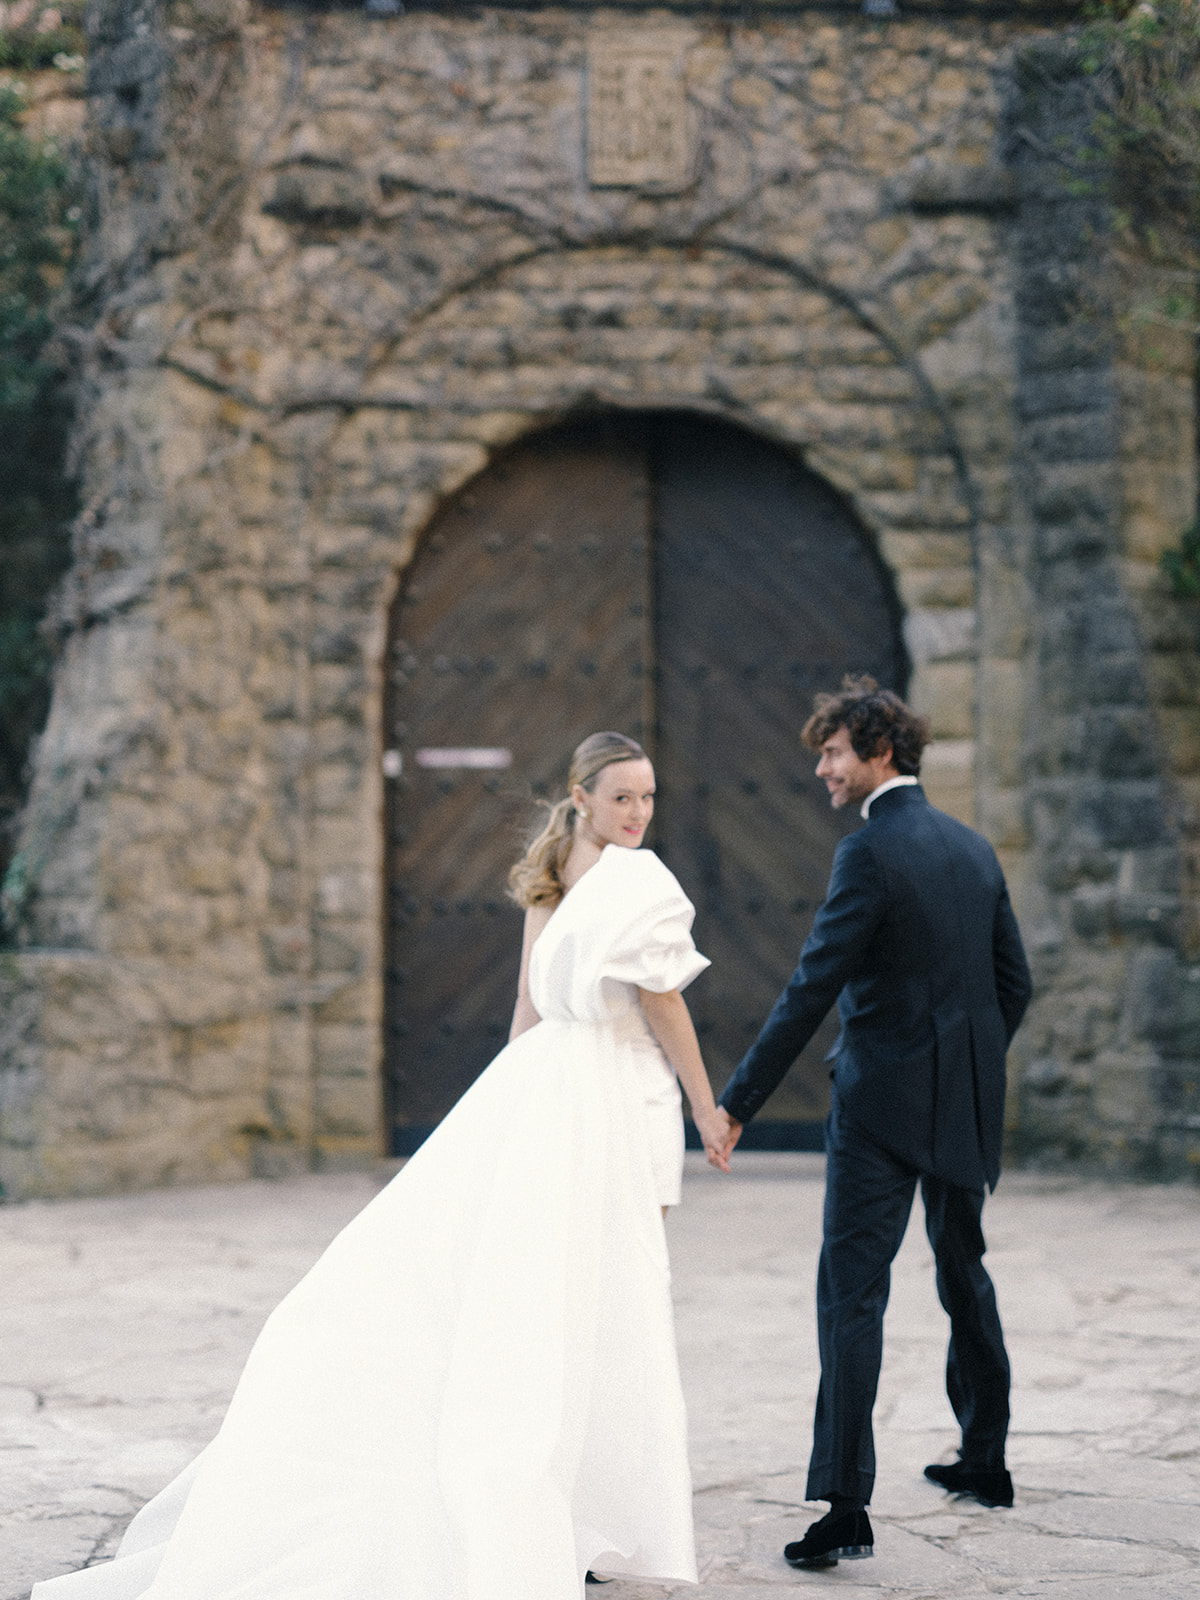 Modern wedding couple at Spanish castle